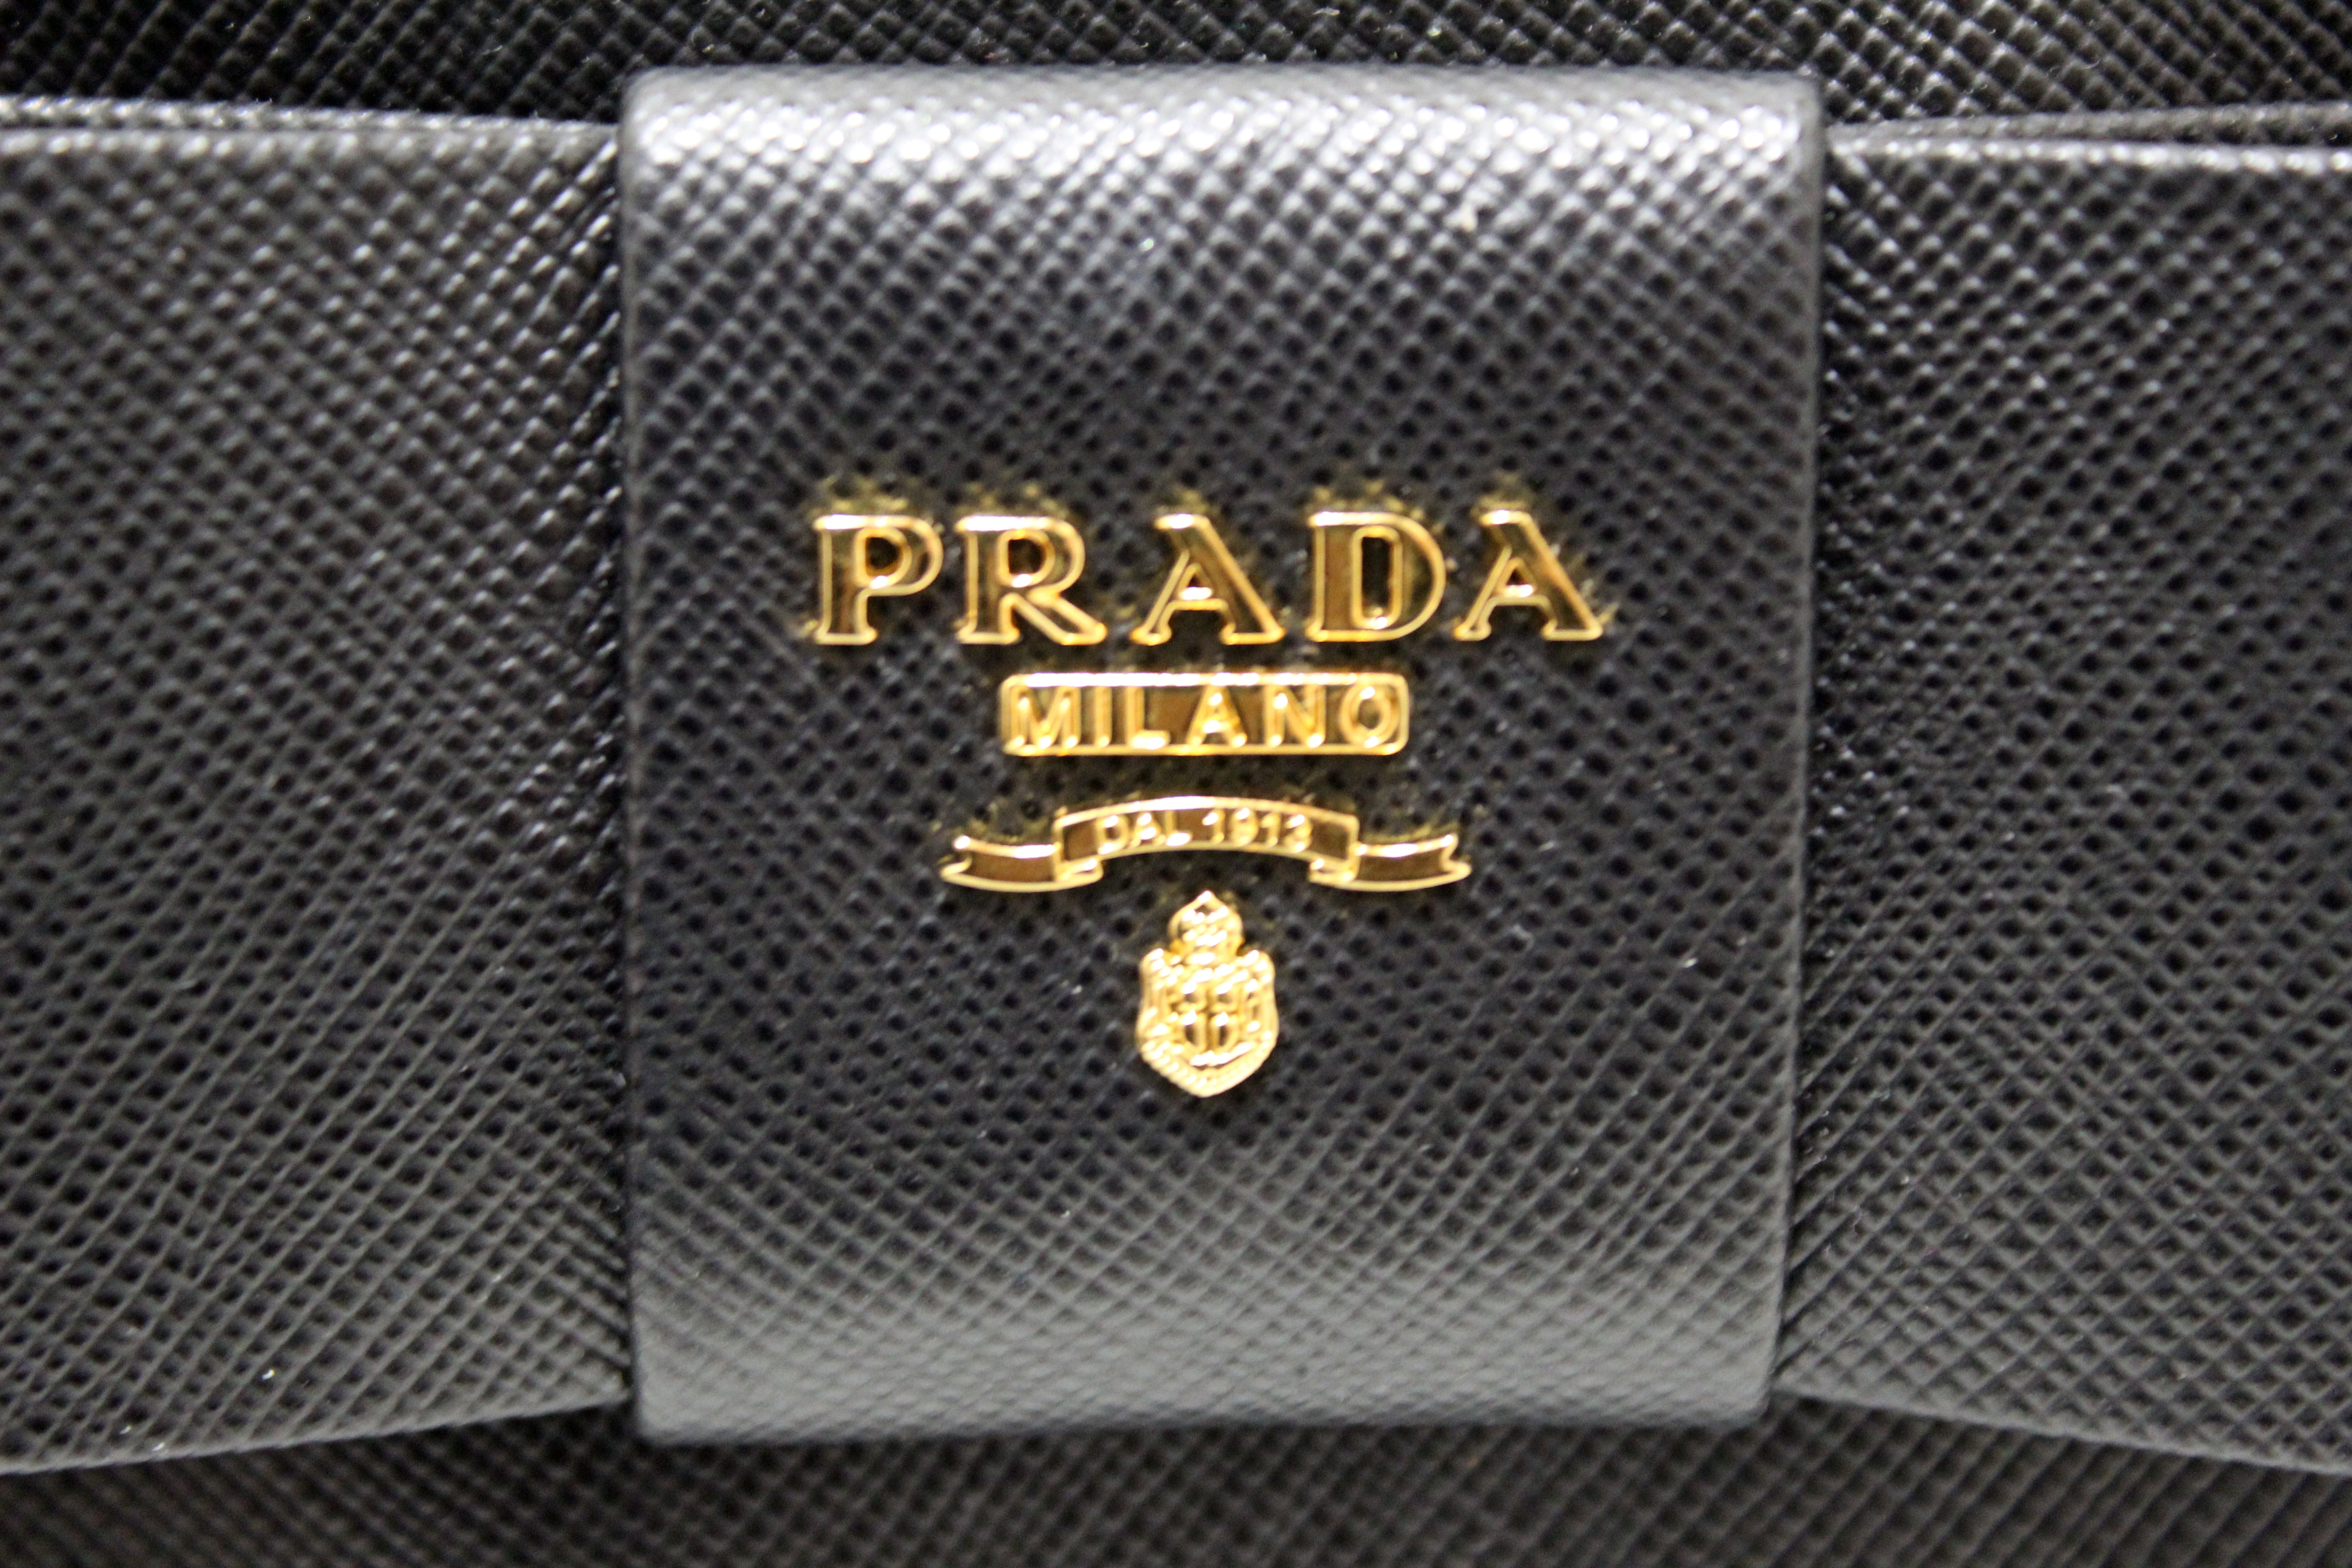 Authentic Prada Black Saffiano Leather Bow Wristlet Pouch